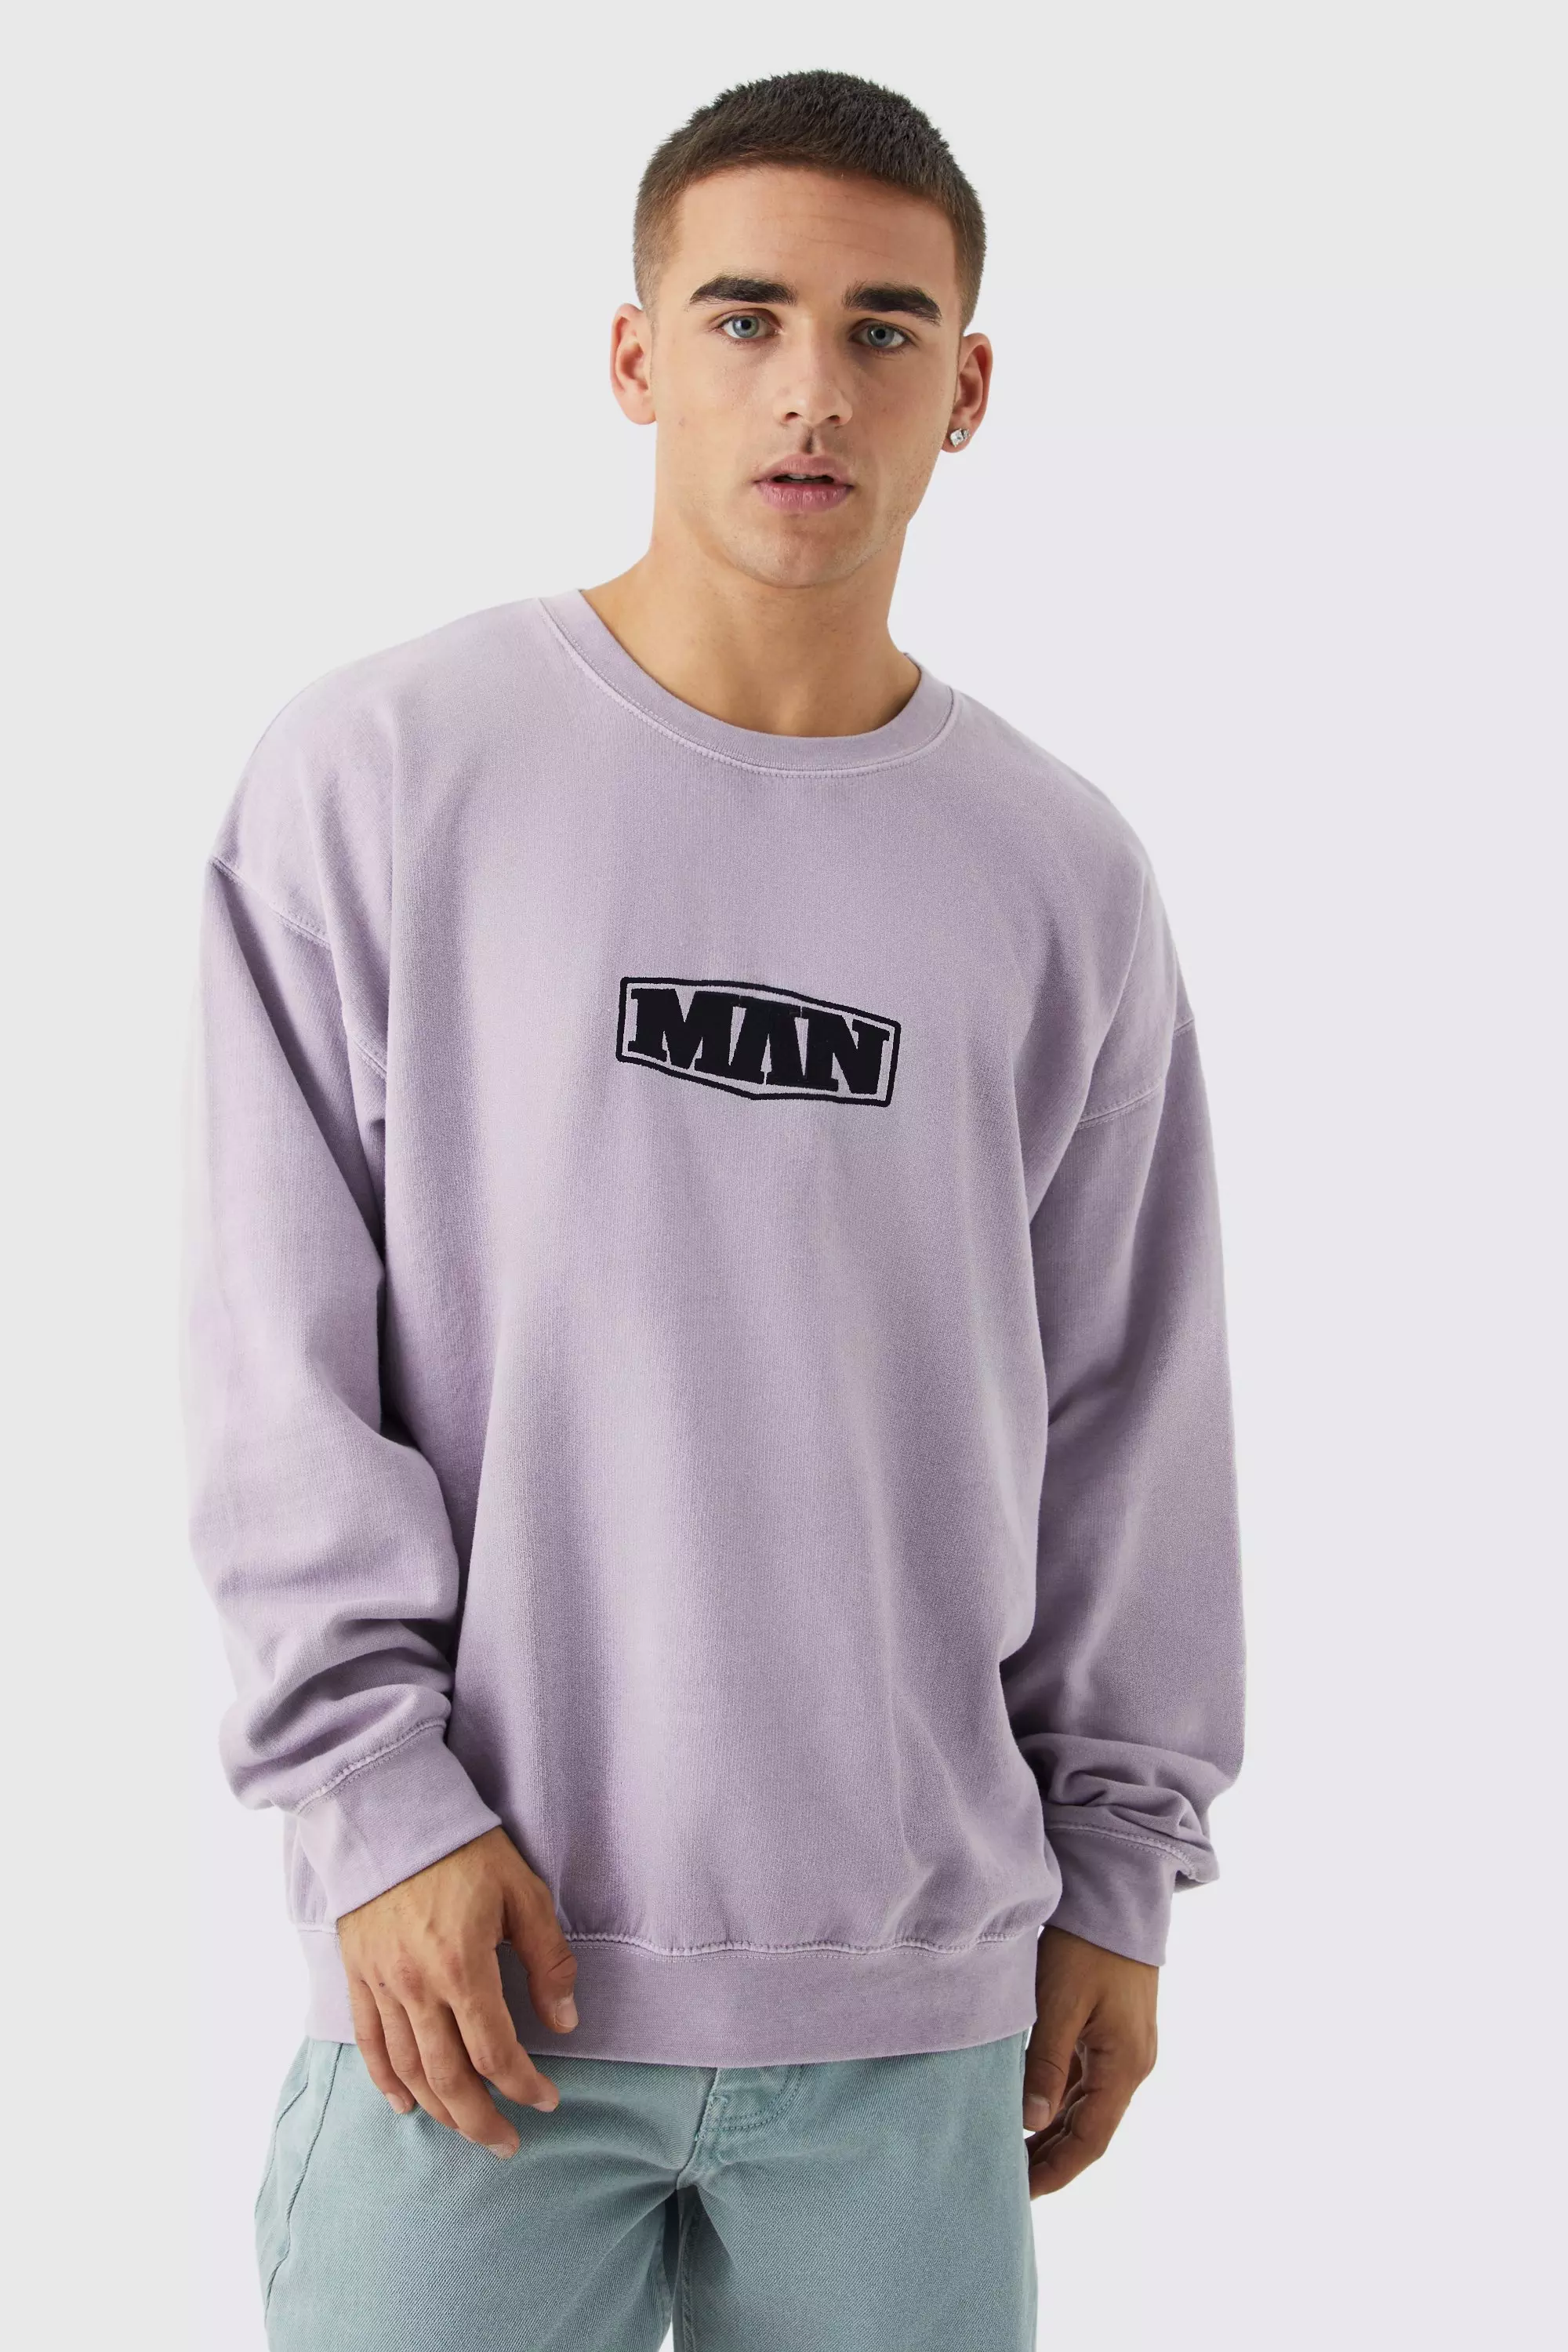 Oversized Acid Wash Man Embroidered Sweatshirt Pale pink